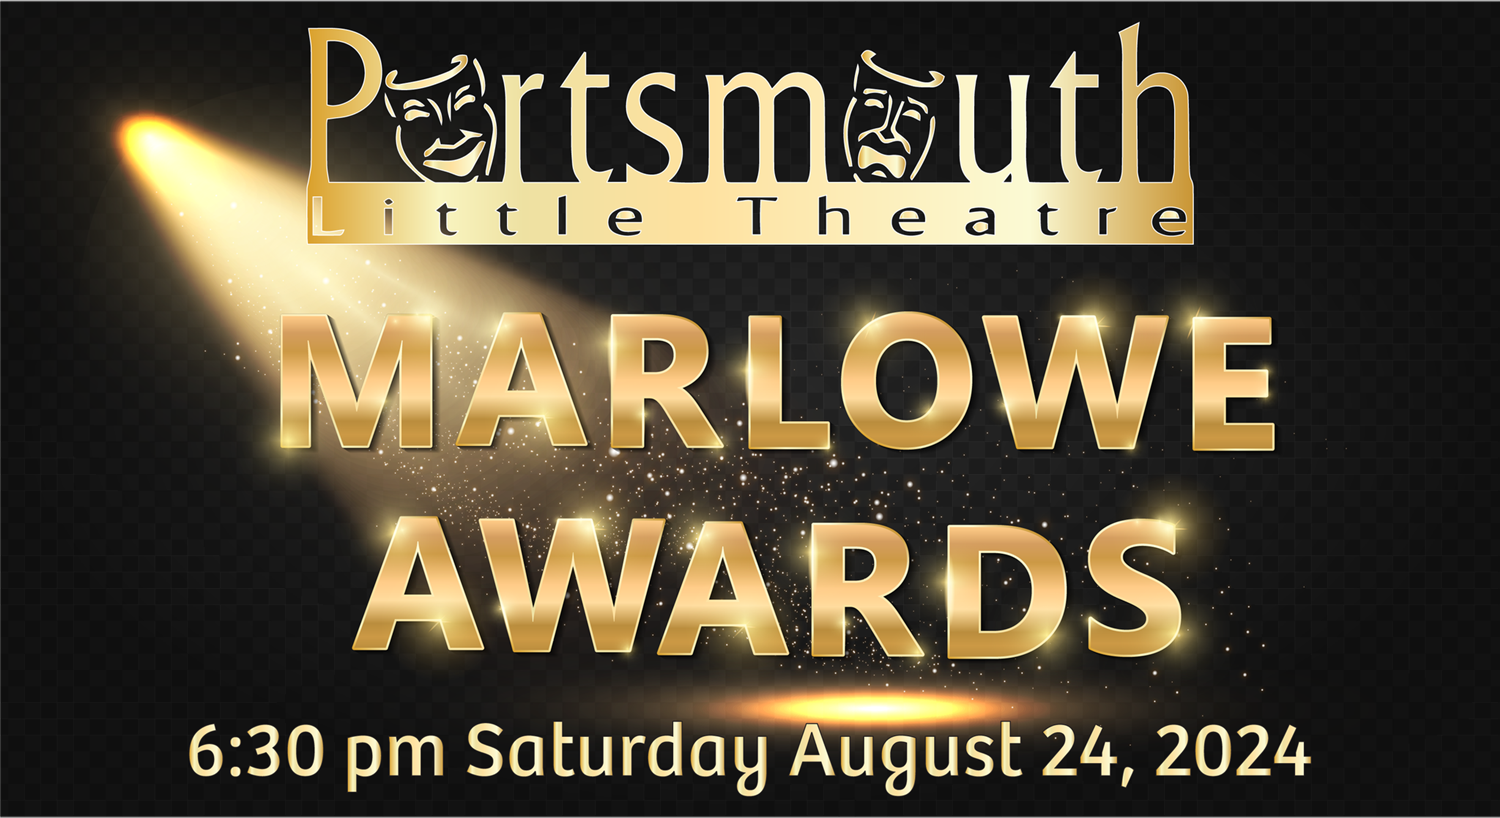 PLT Marlowe Awards 2024  on ago. 24, 18:30@201 2nd Street - Compra entradas y obtén información enPortsmouth Little Theatre 